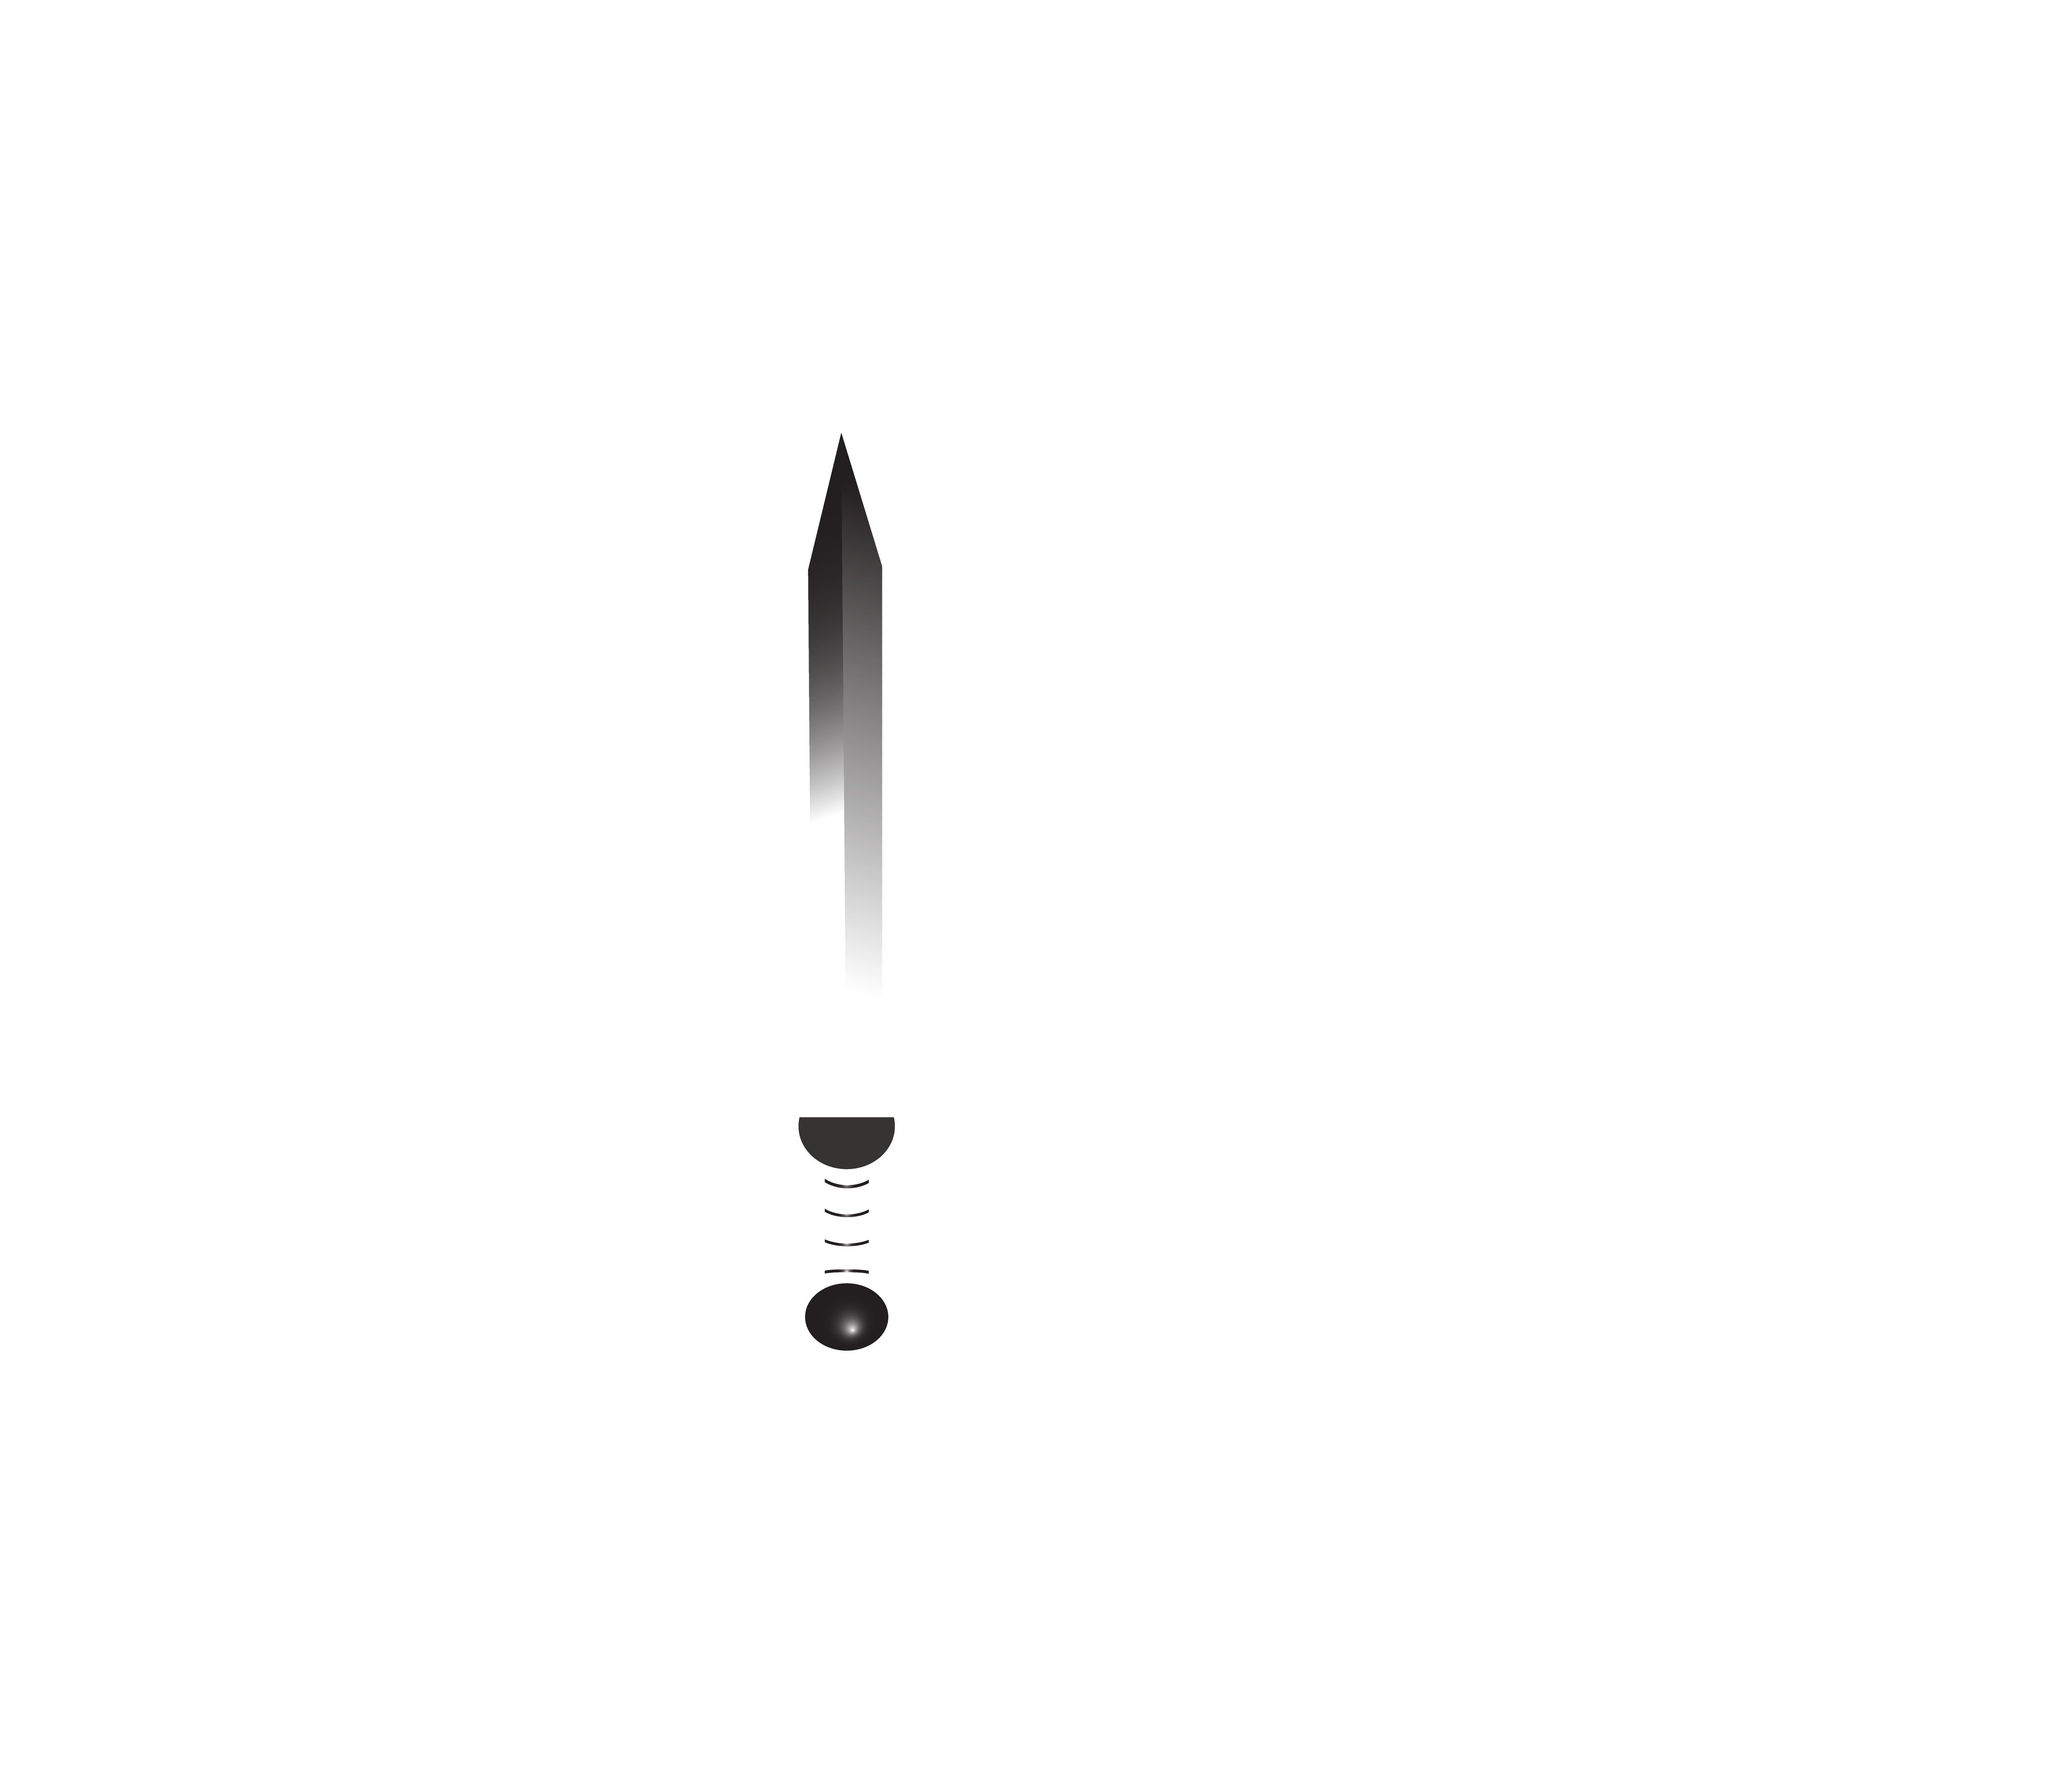 Petkov Capital Management